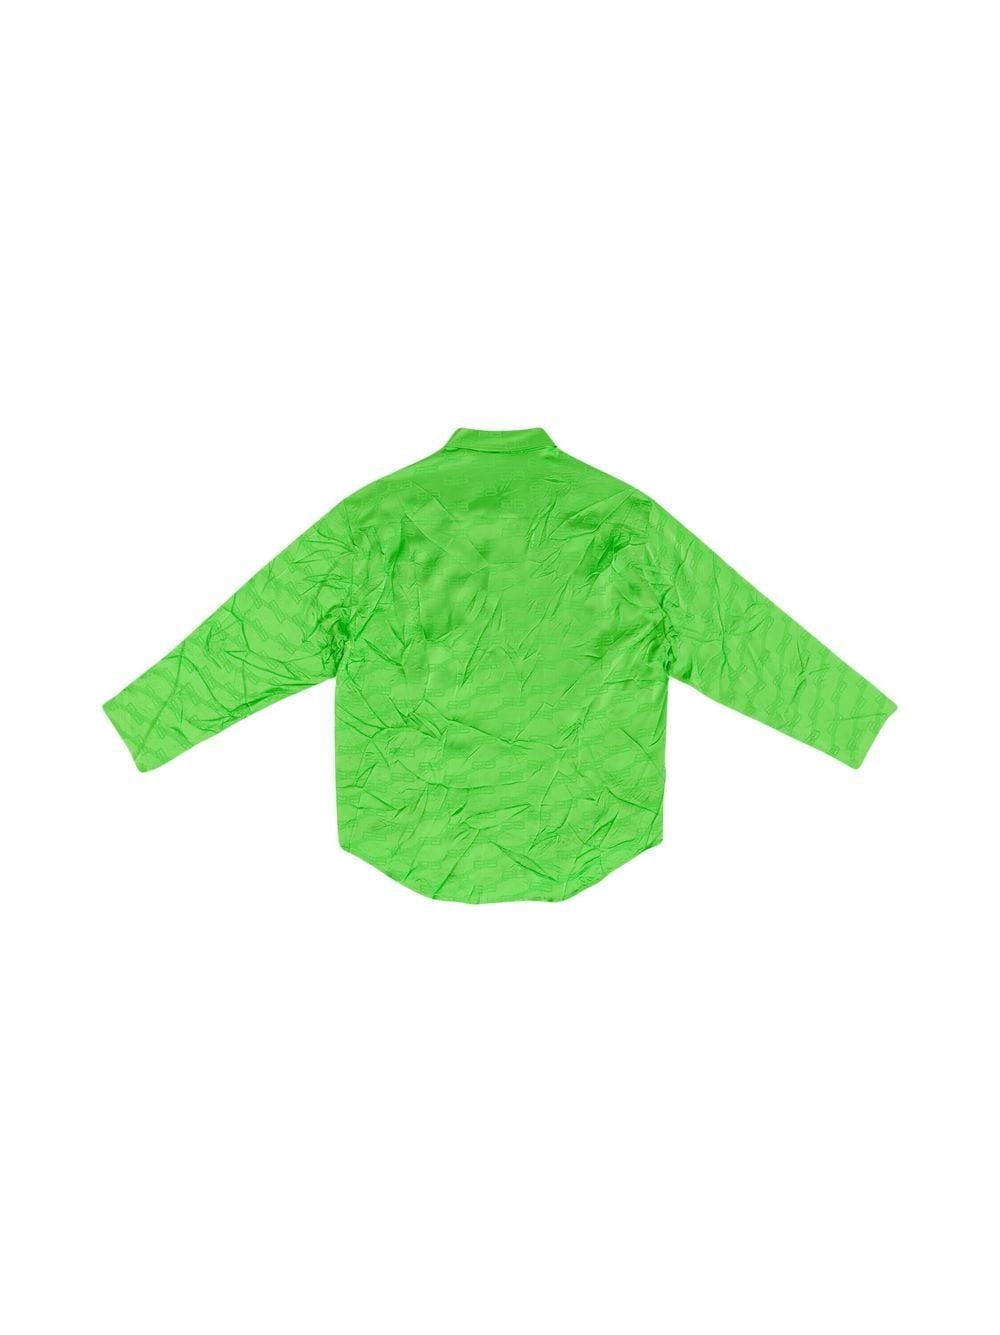 Medium Fit Short Sleeved T Shirt in Green  Balenciaga  Mytheresa